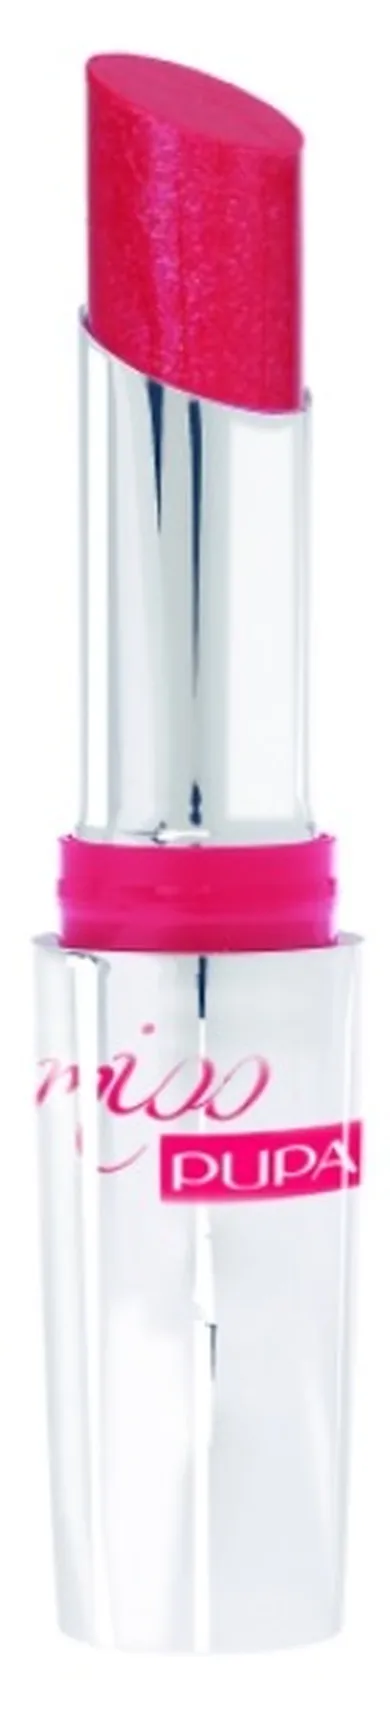 Pupa, Miss Pupa Ultra Brilliant Lipstick, pomadka do ust 201, 2,4 ml